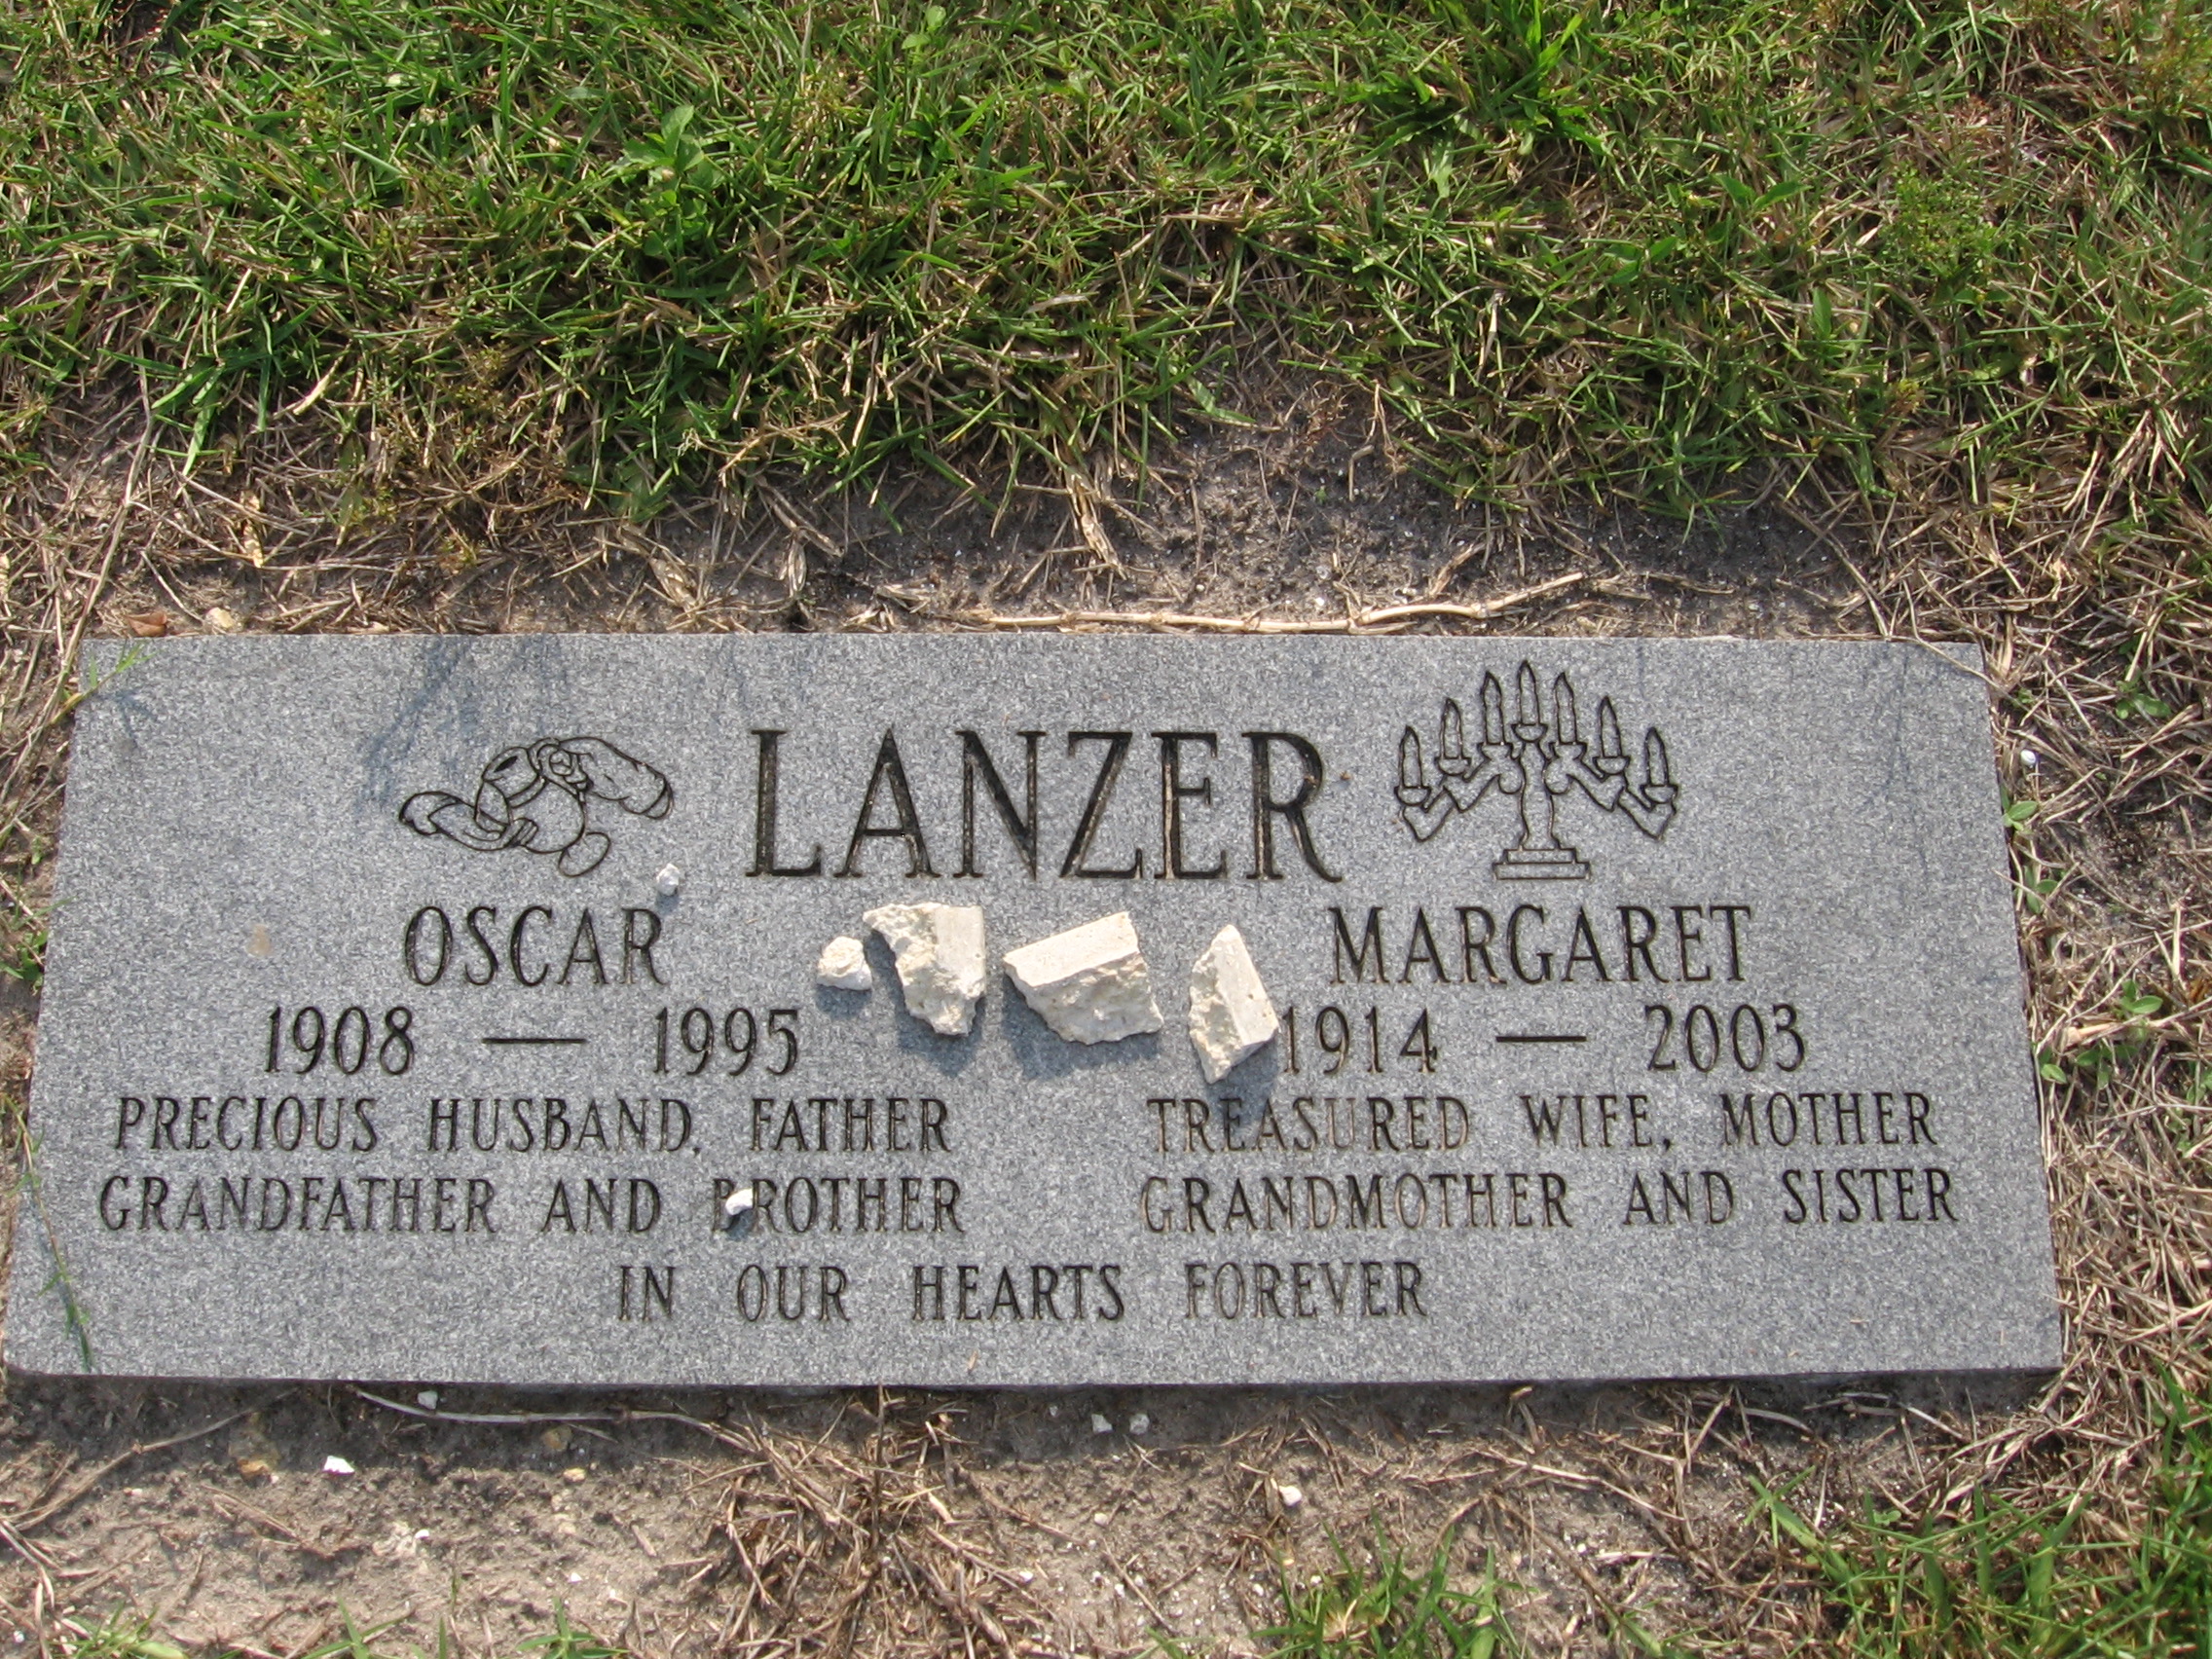 Oscar Lanzer